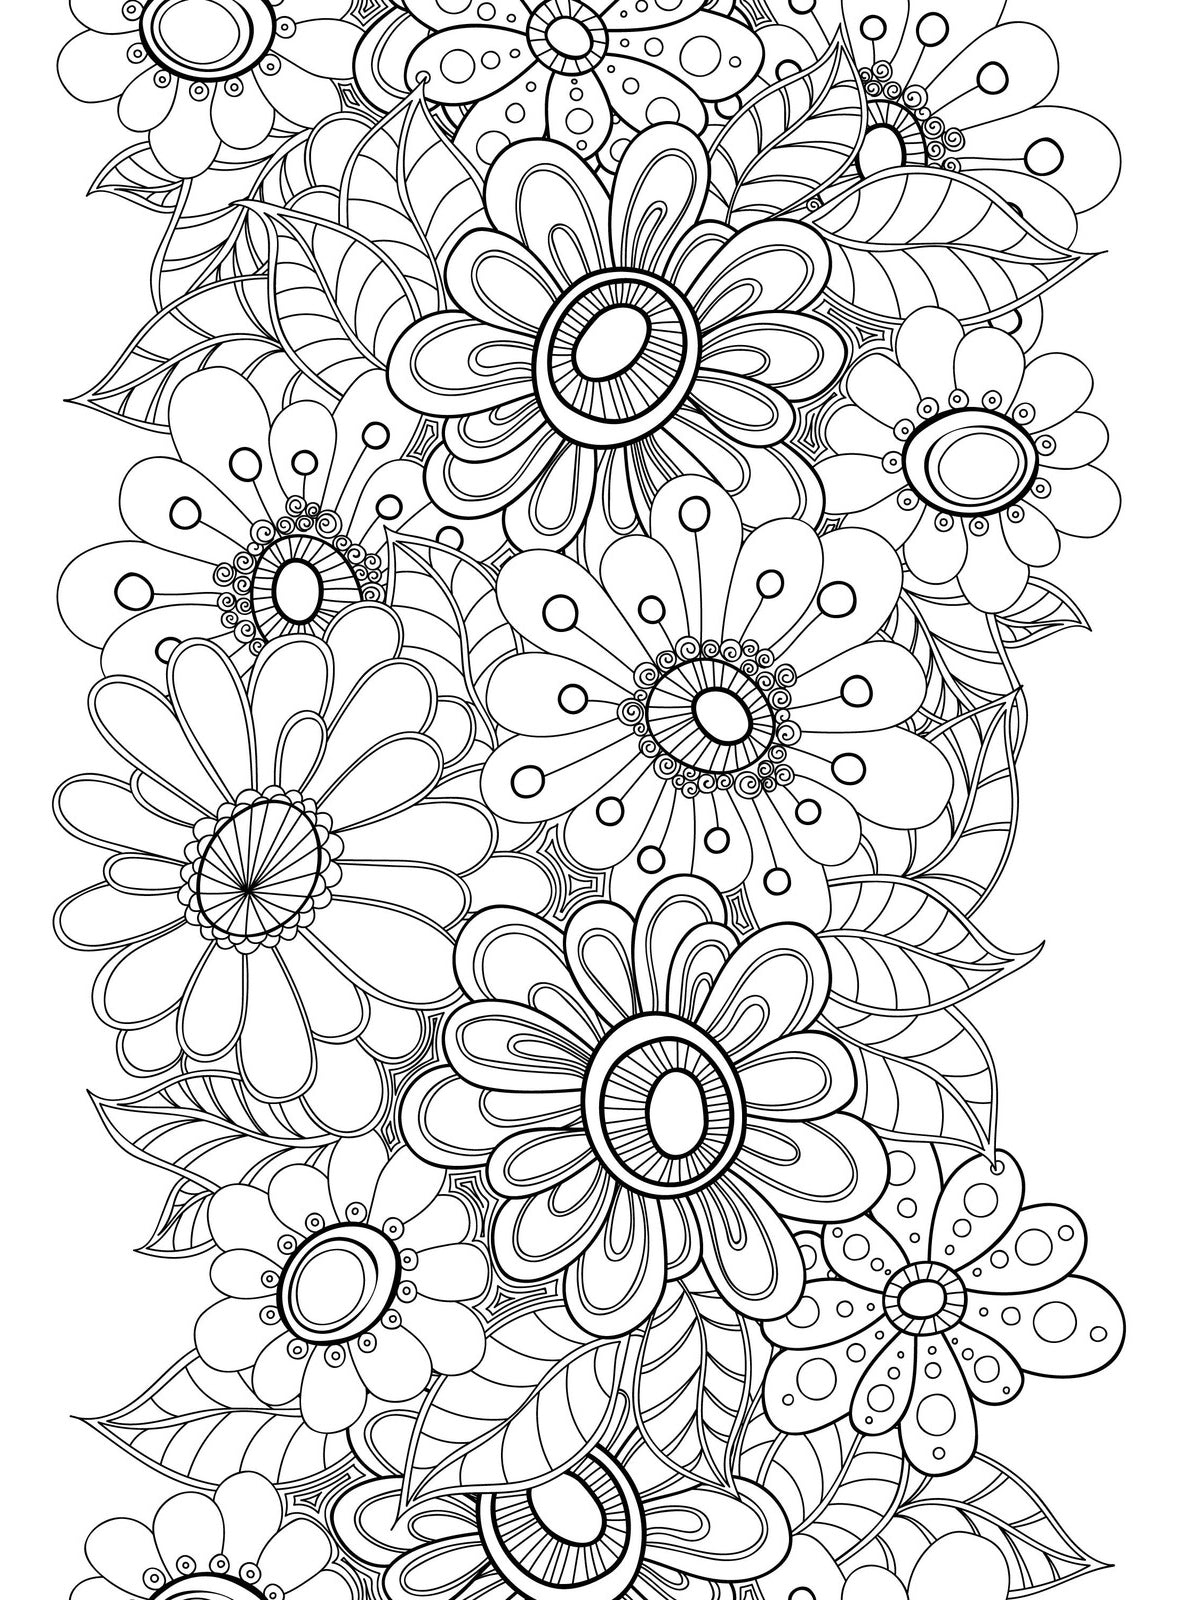 Blooming Pillars - Relaxing Flowers, PDF Coloring Book